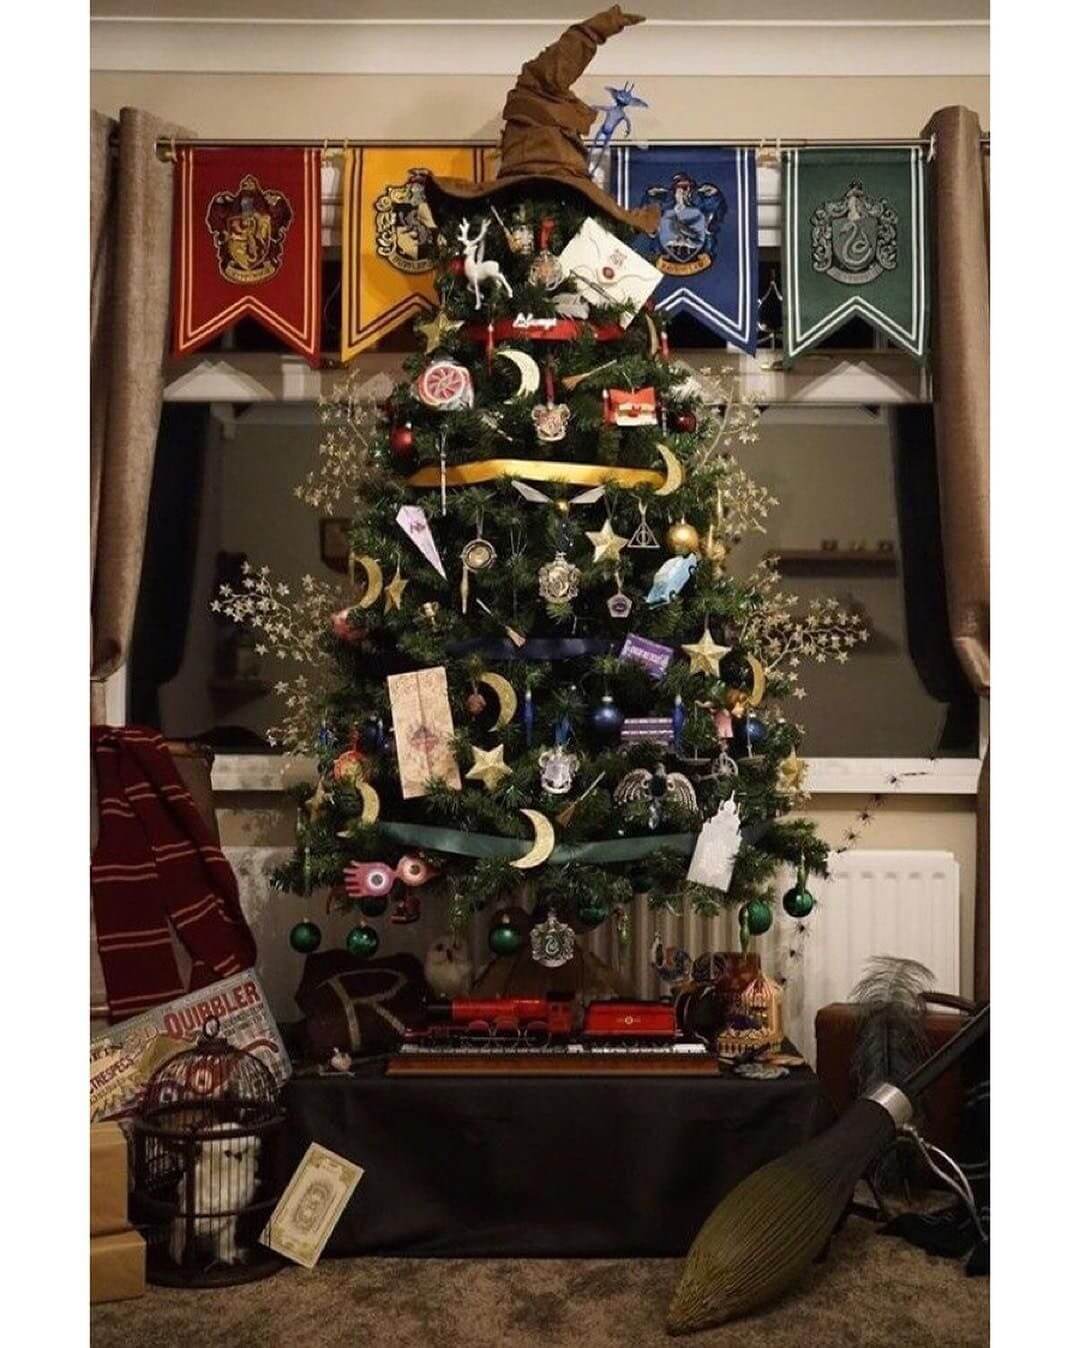 A Harry Potter Christmas tree (1)